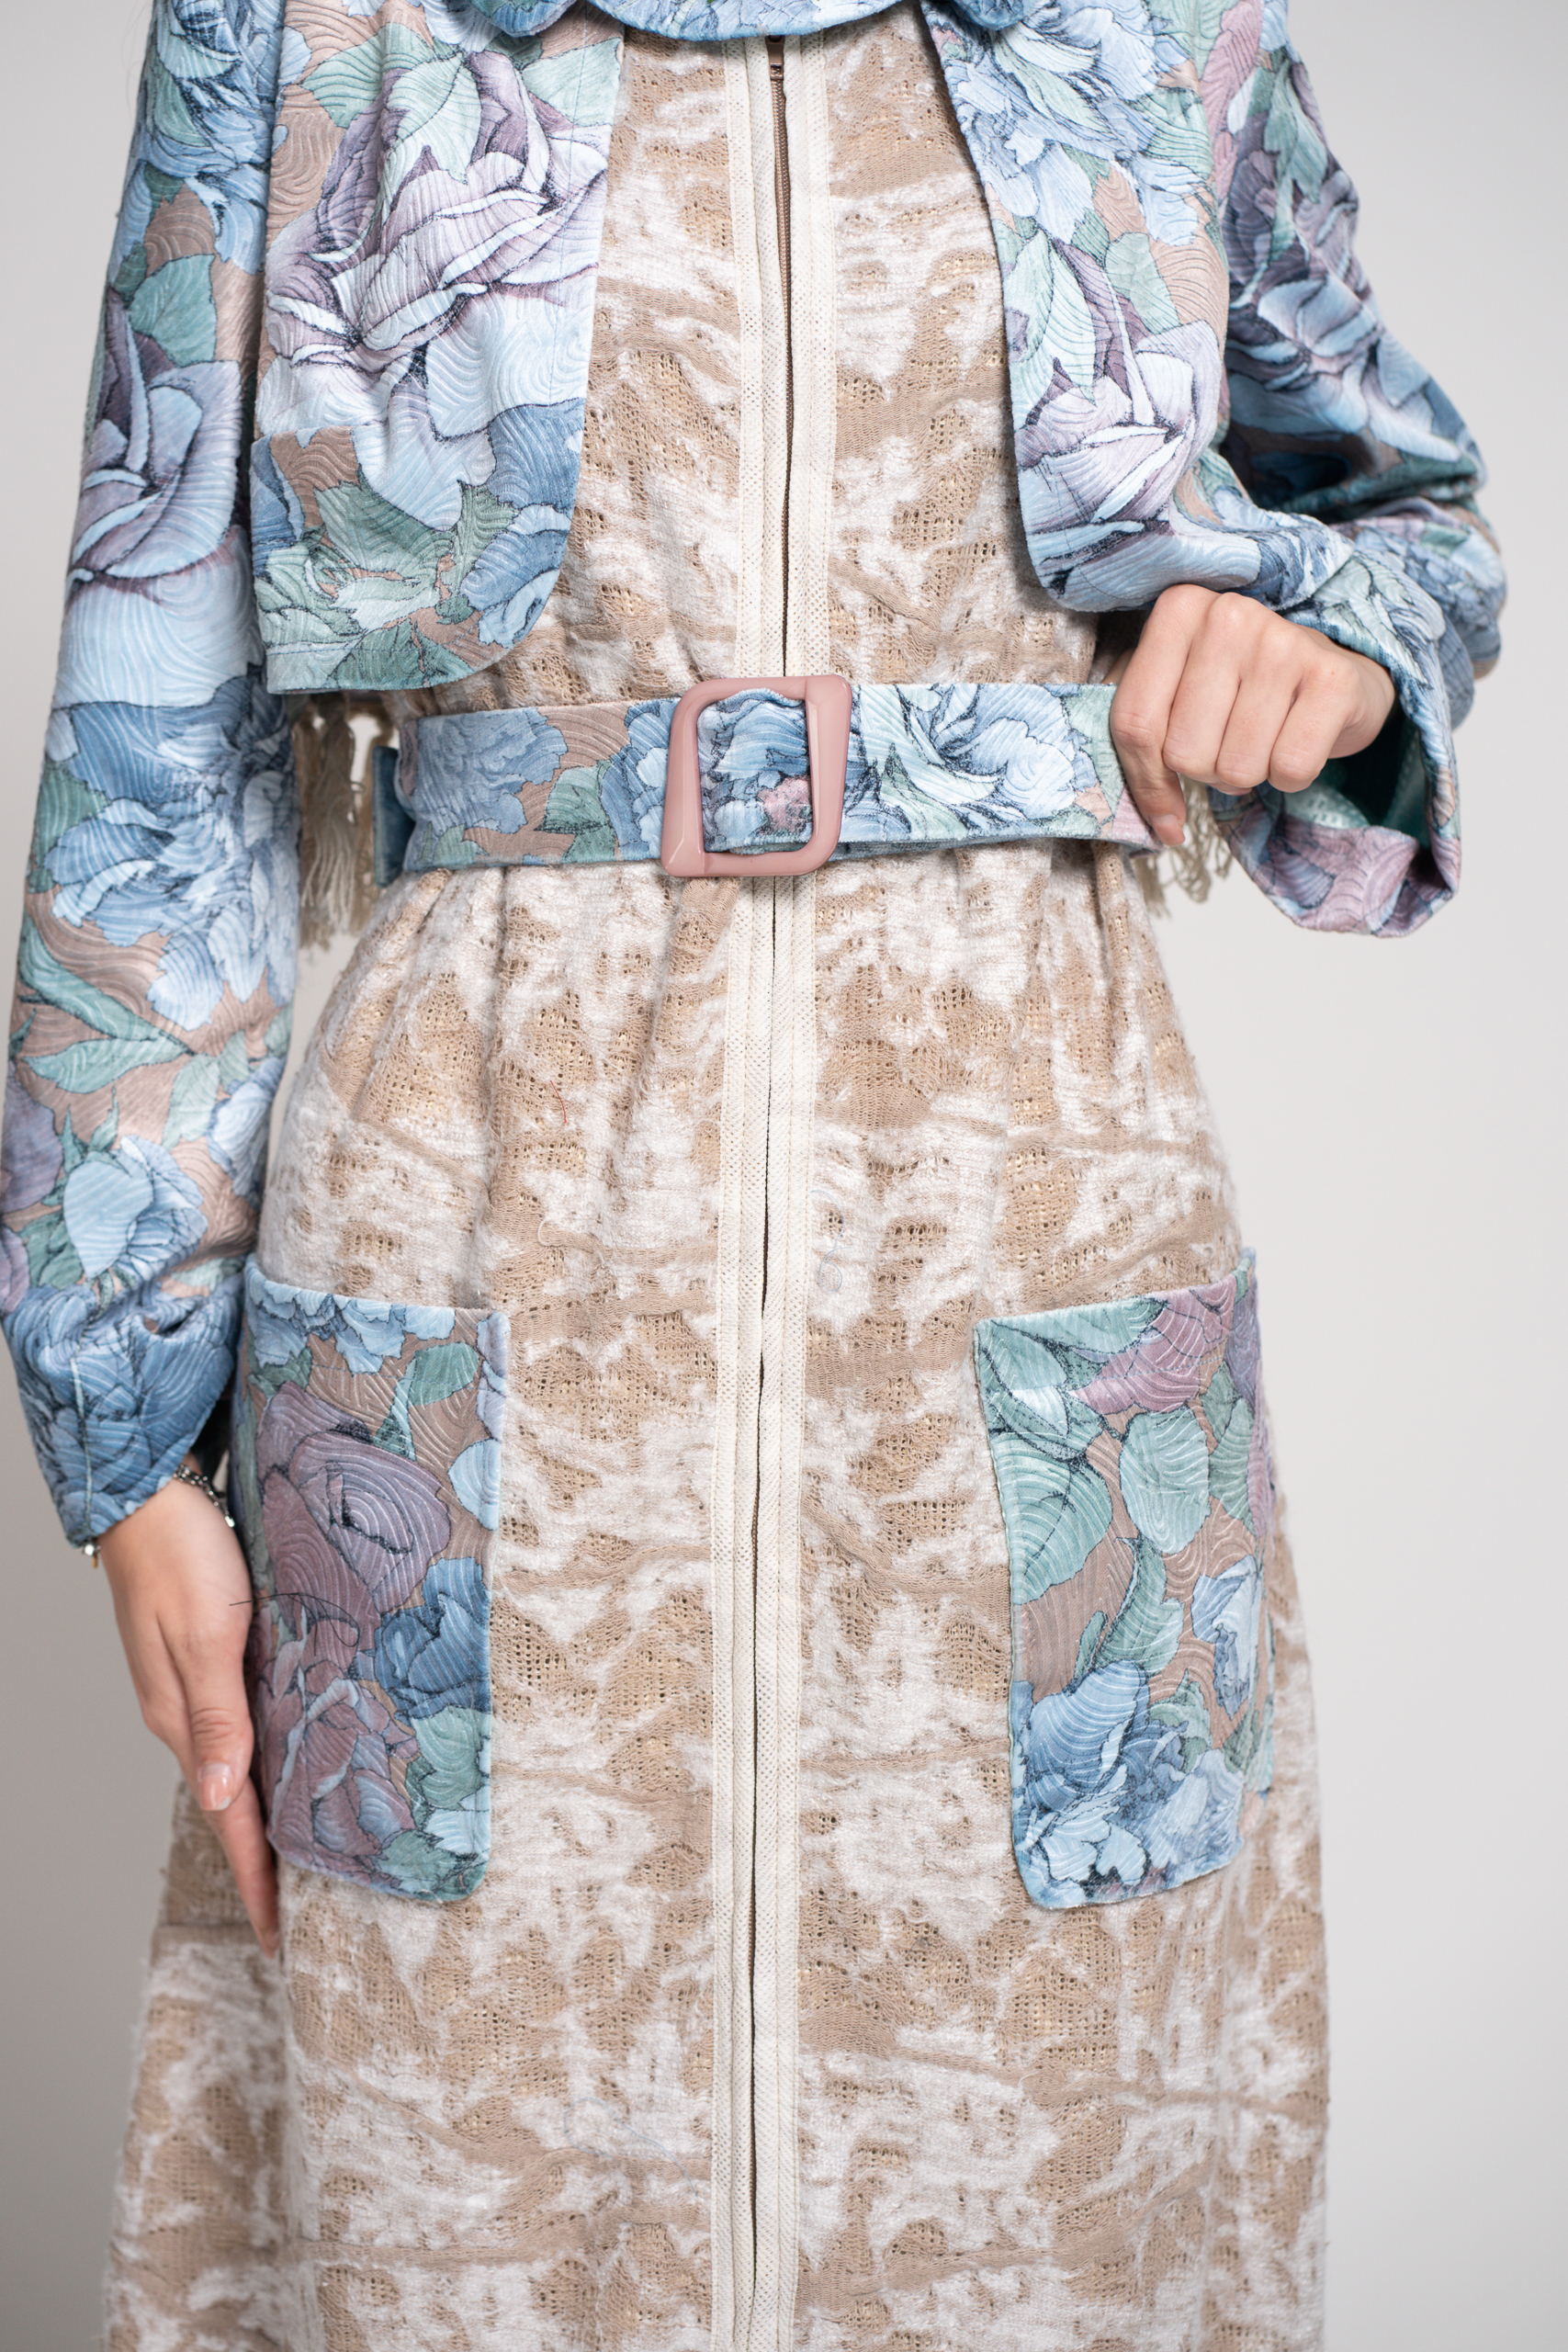 KATO OVERCOAT in velvet with floral print. Natural fabrics, original design, handmade embroidery